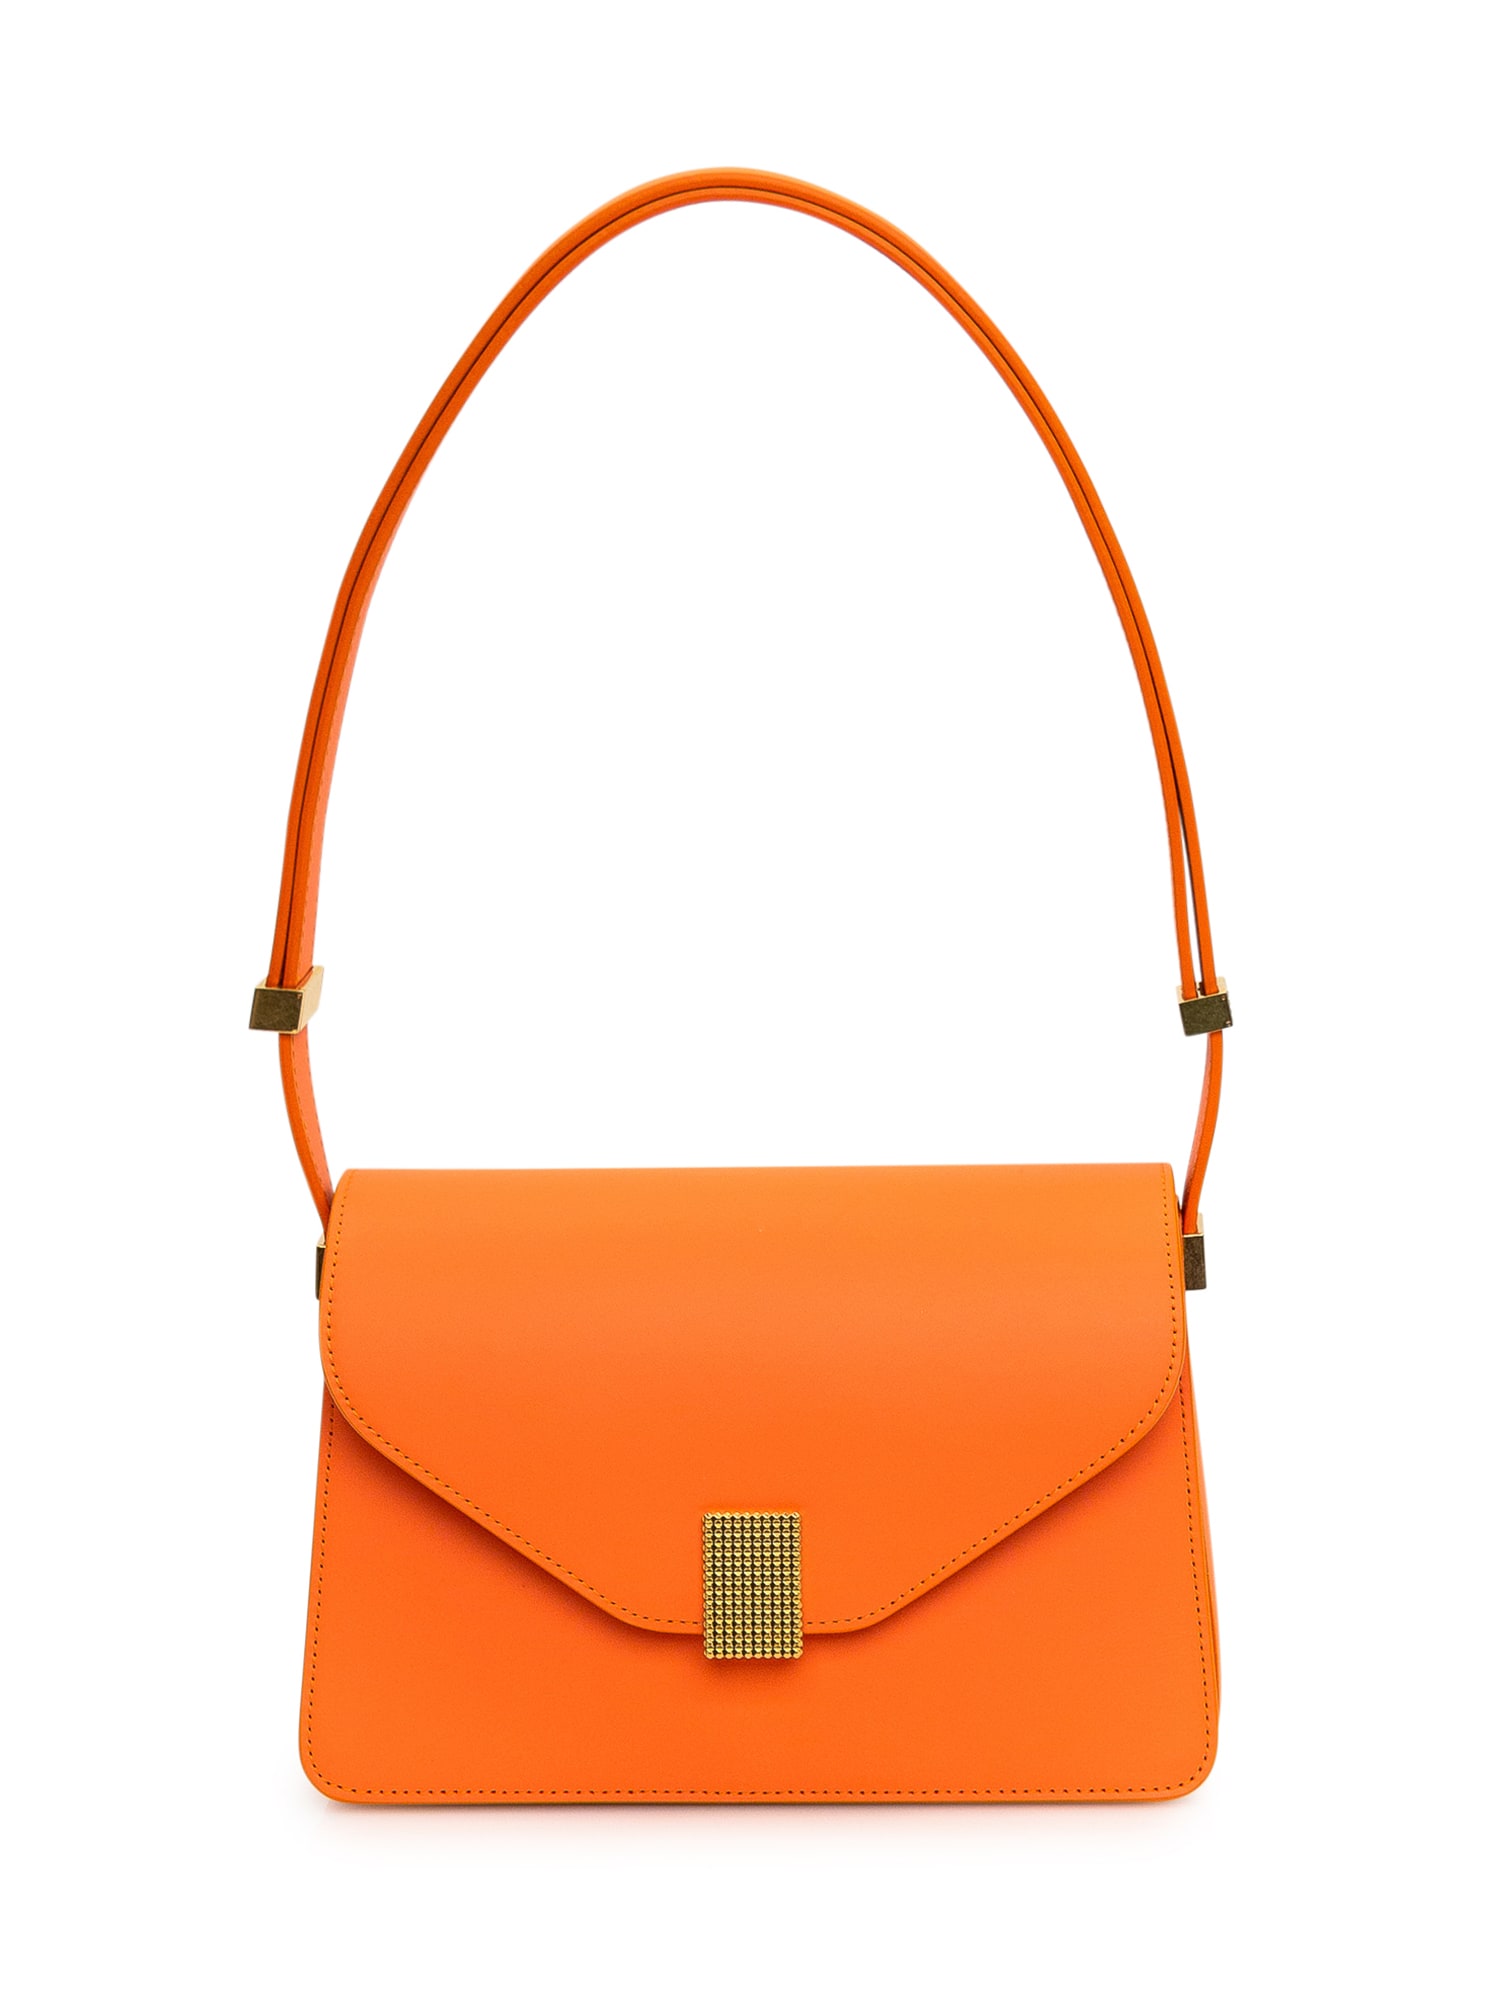 Lanvin Concerto Shoulder Bag In Bright Orange